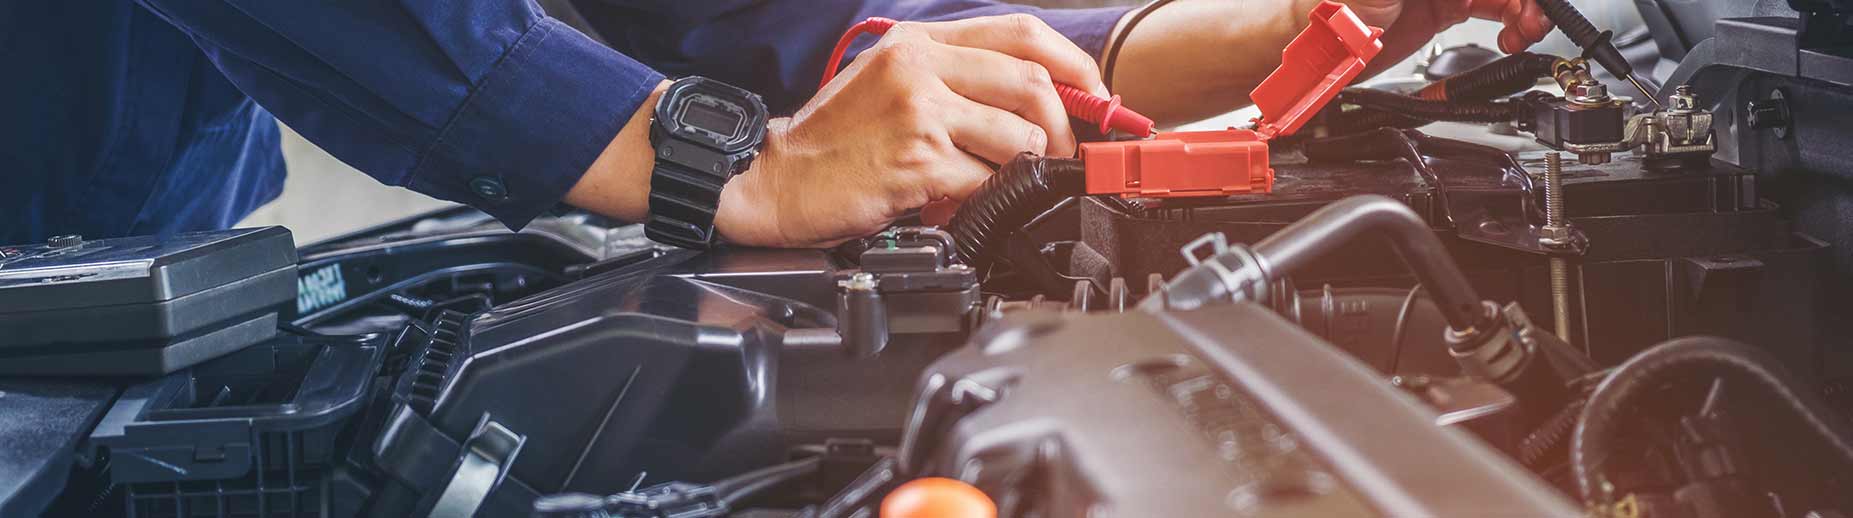 Ely Auto Repair, Car Repair and Auto Mechanic